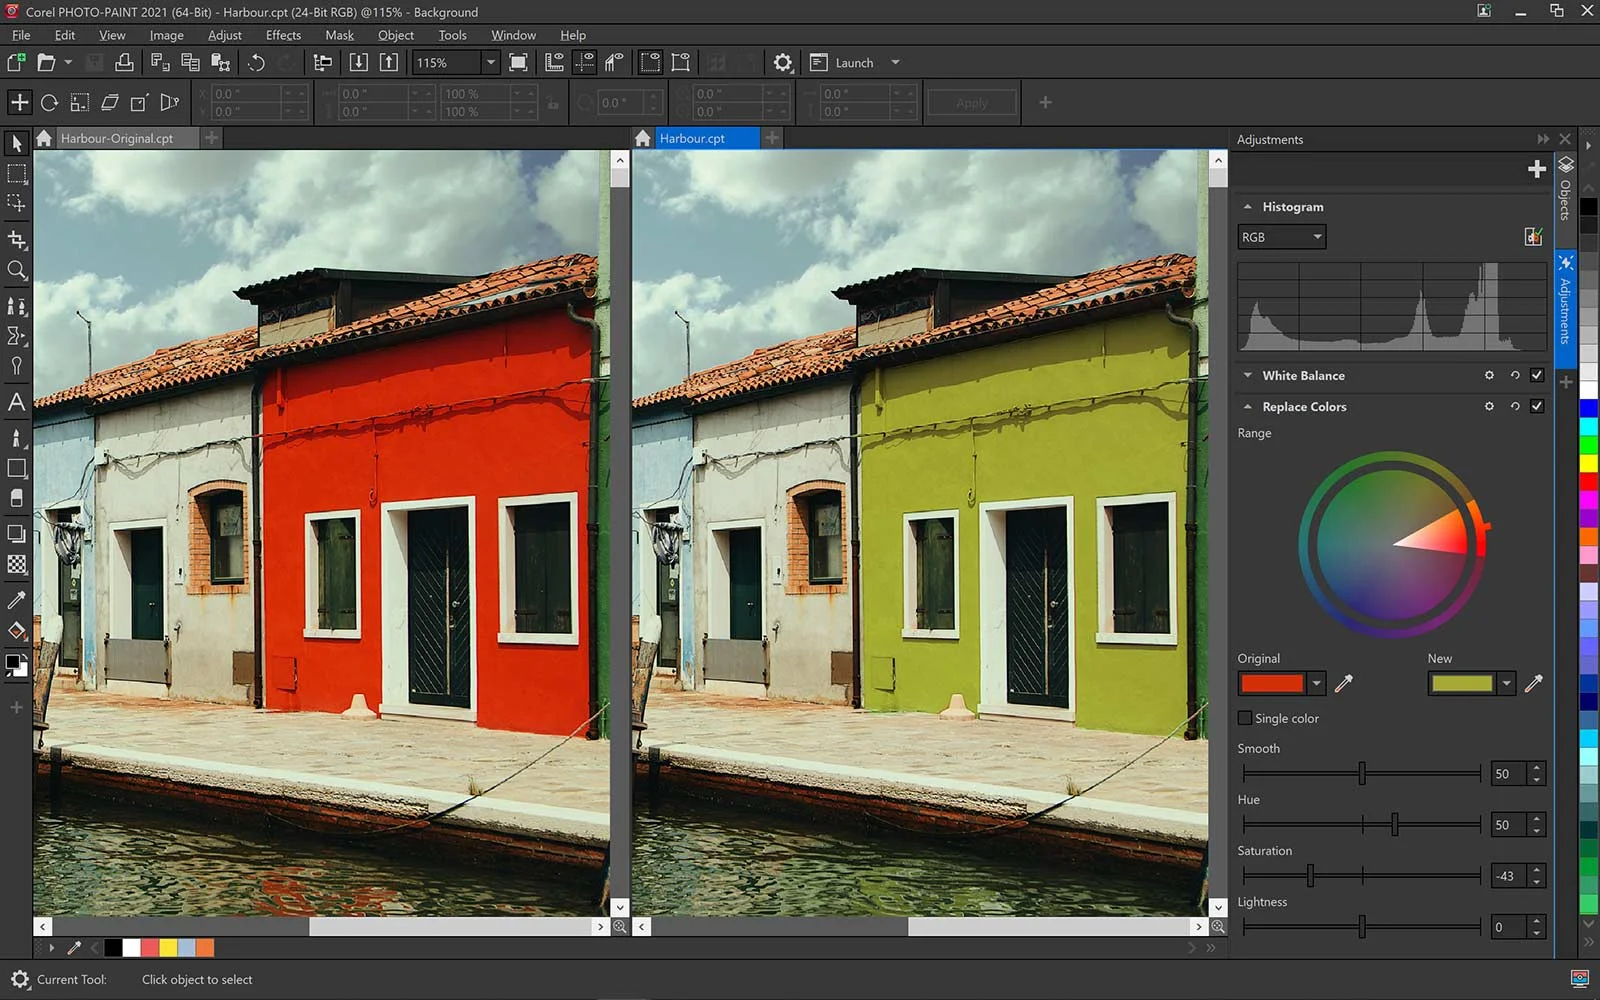 CorelDraw Graphics Suite 2021 photo paint pc tools